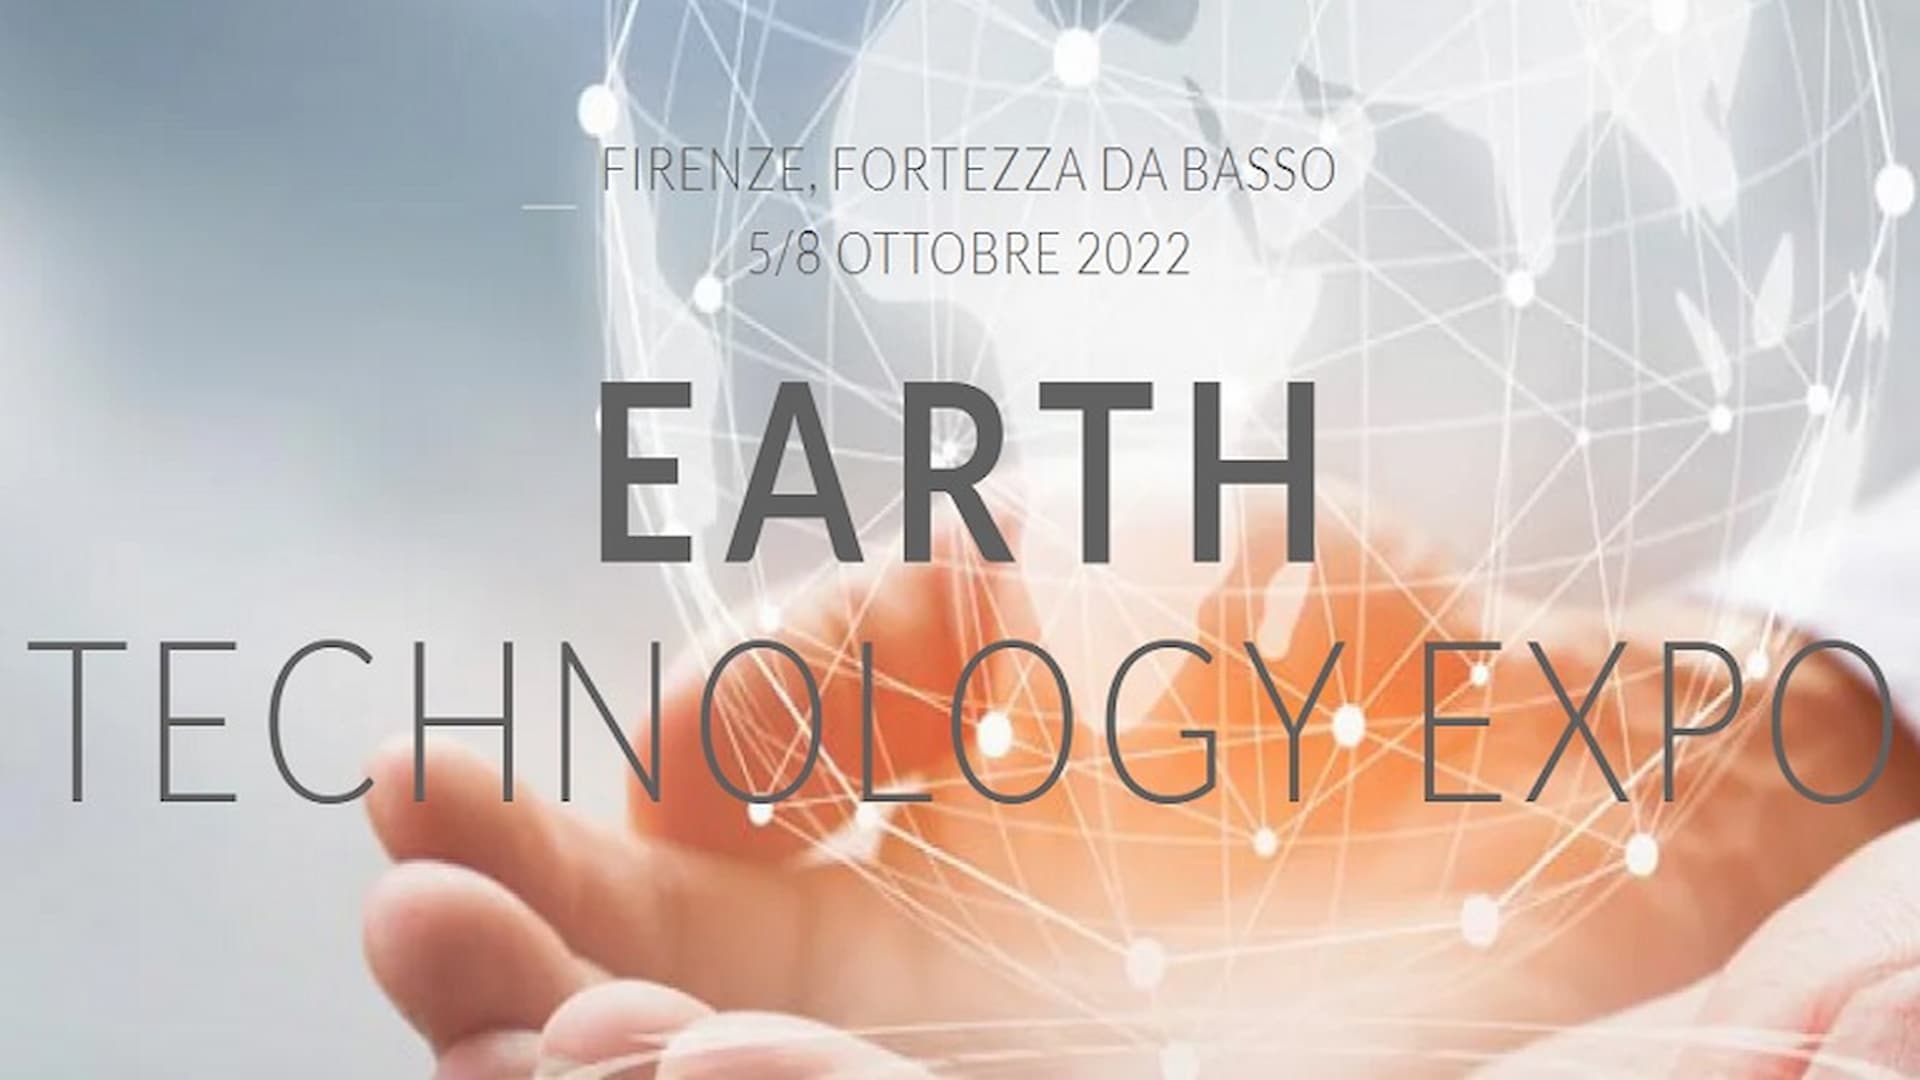 ASI - L’Agenzia Spaziale Italiana a Earth Technology Expo 2022